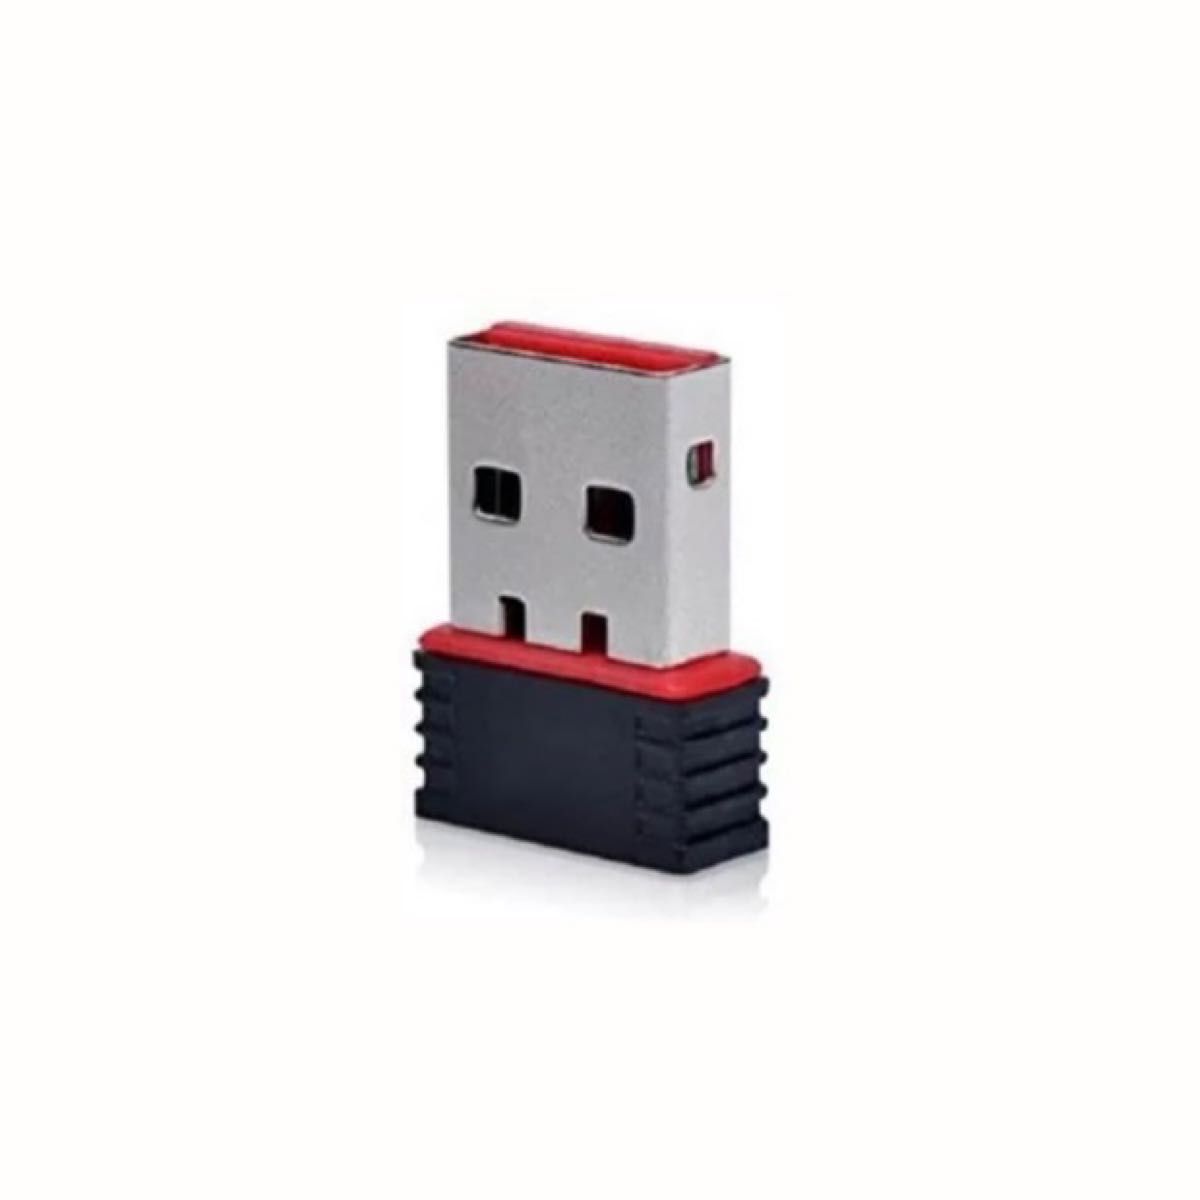 【２個】超小型 USBWiFi子機 USB 無線LAN wifi 受信機 無線LAN子機 IEEE802.11n USBアダプタ